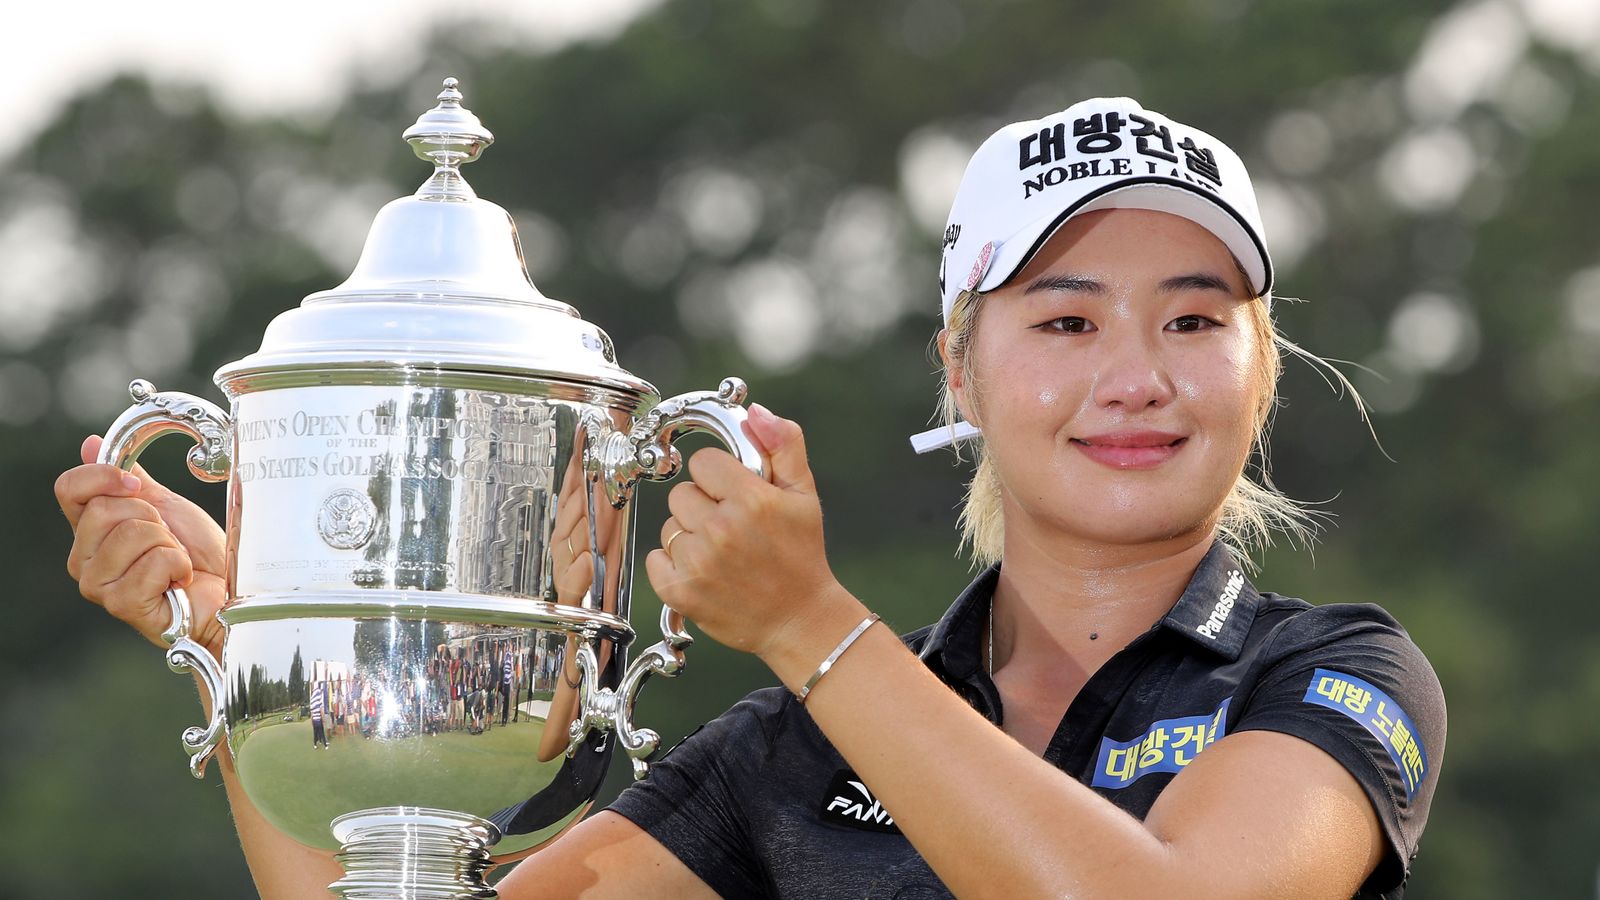 US Women's Open Jeongeun Lee6 survives scare to win maiden major